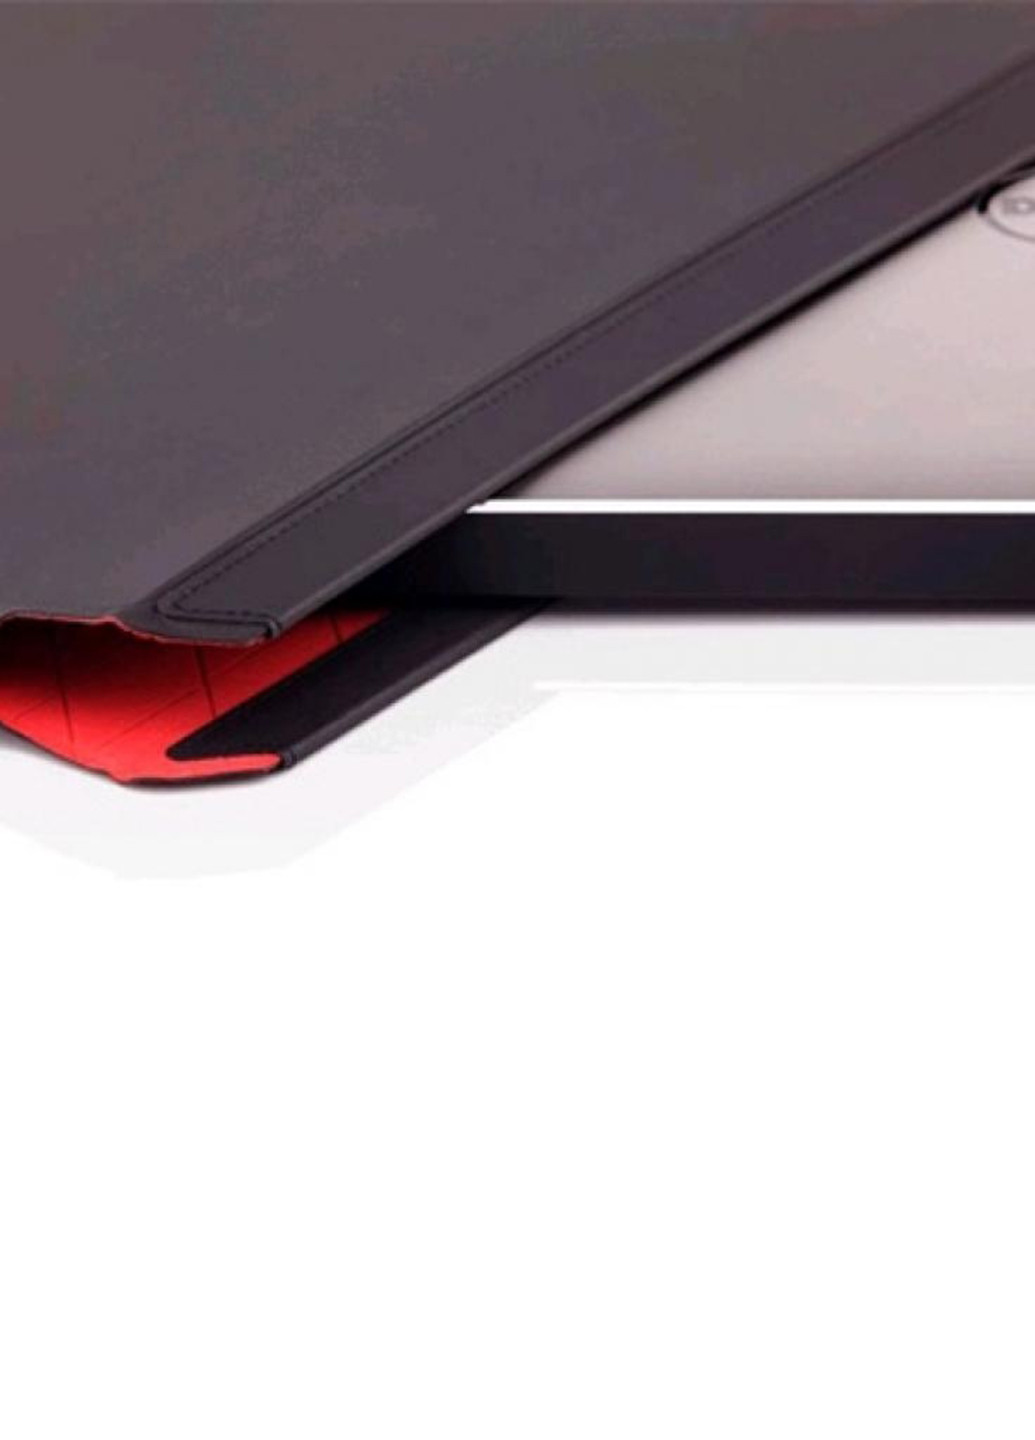 Сумка для ноутбука Premier Sleeve (M) fits Precision 5510 / XPS 15 Dell 460-bbvf (133591019)